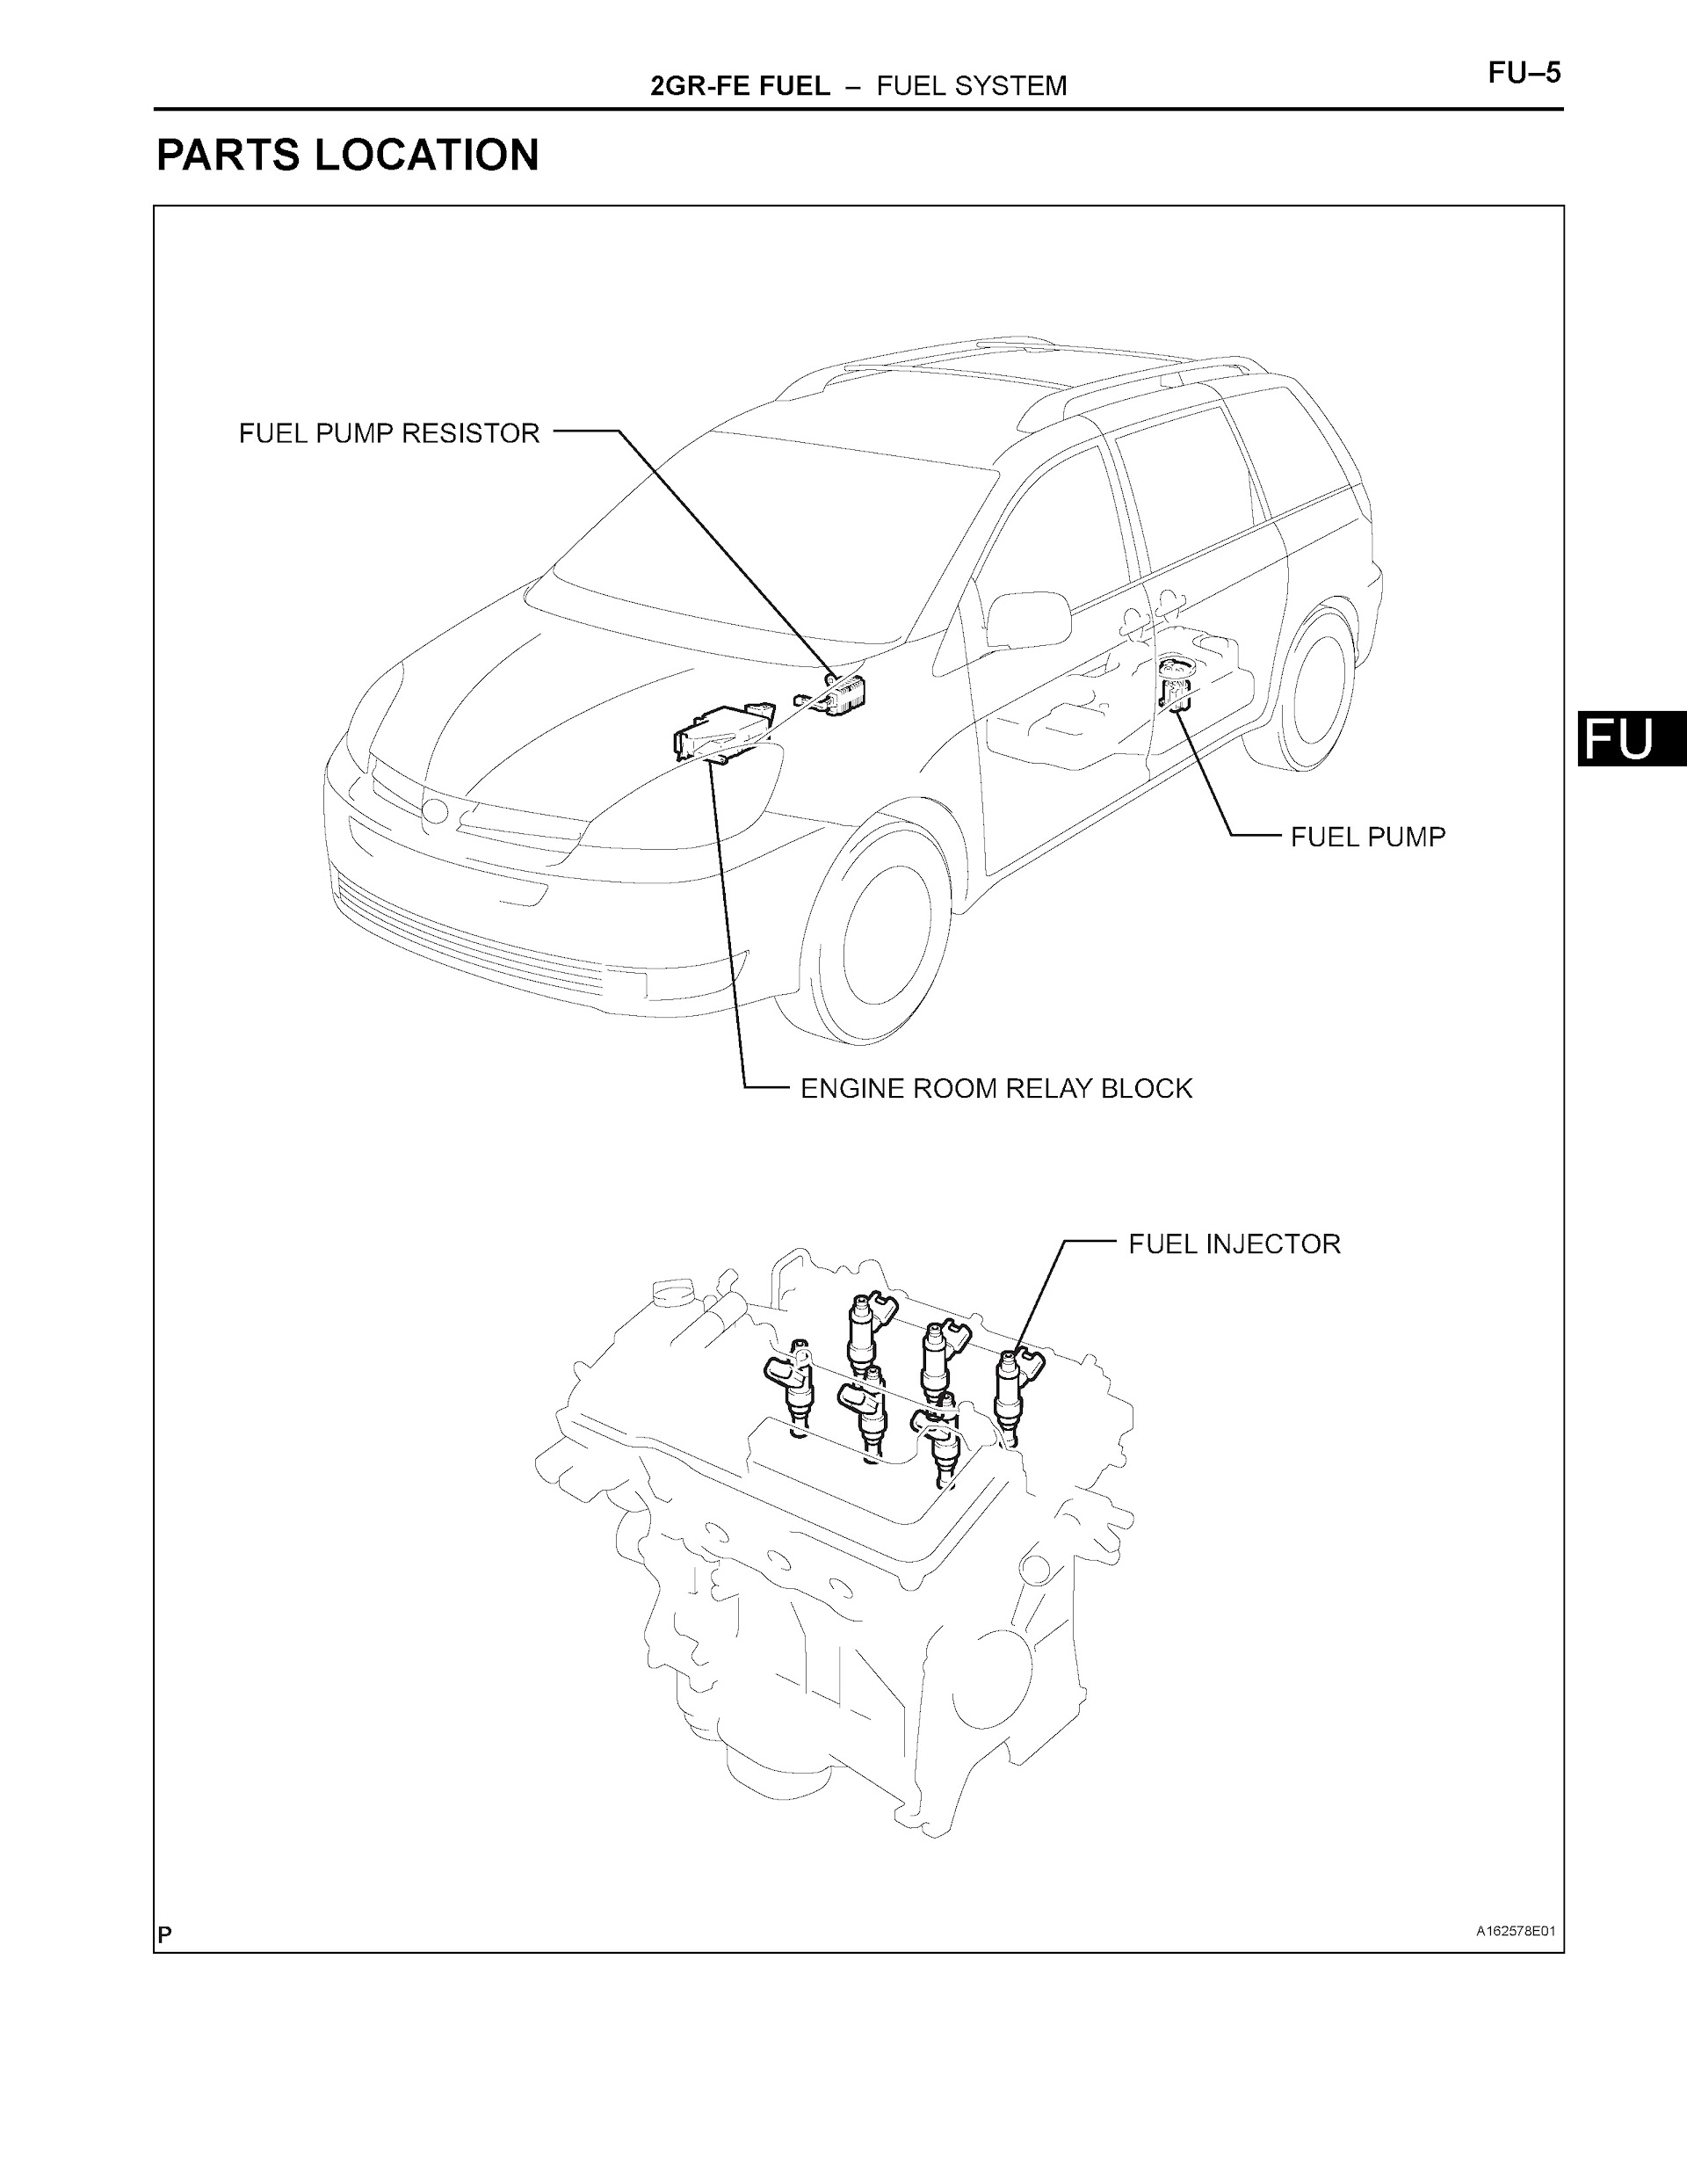 2007 Toyota Sienna Repair Manual, 2GR-FE Fuel System